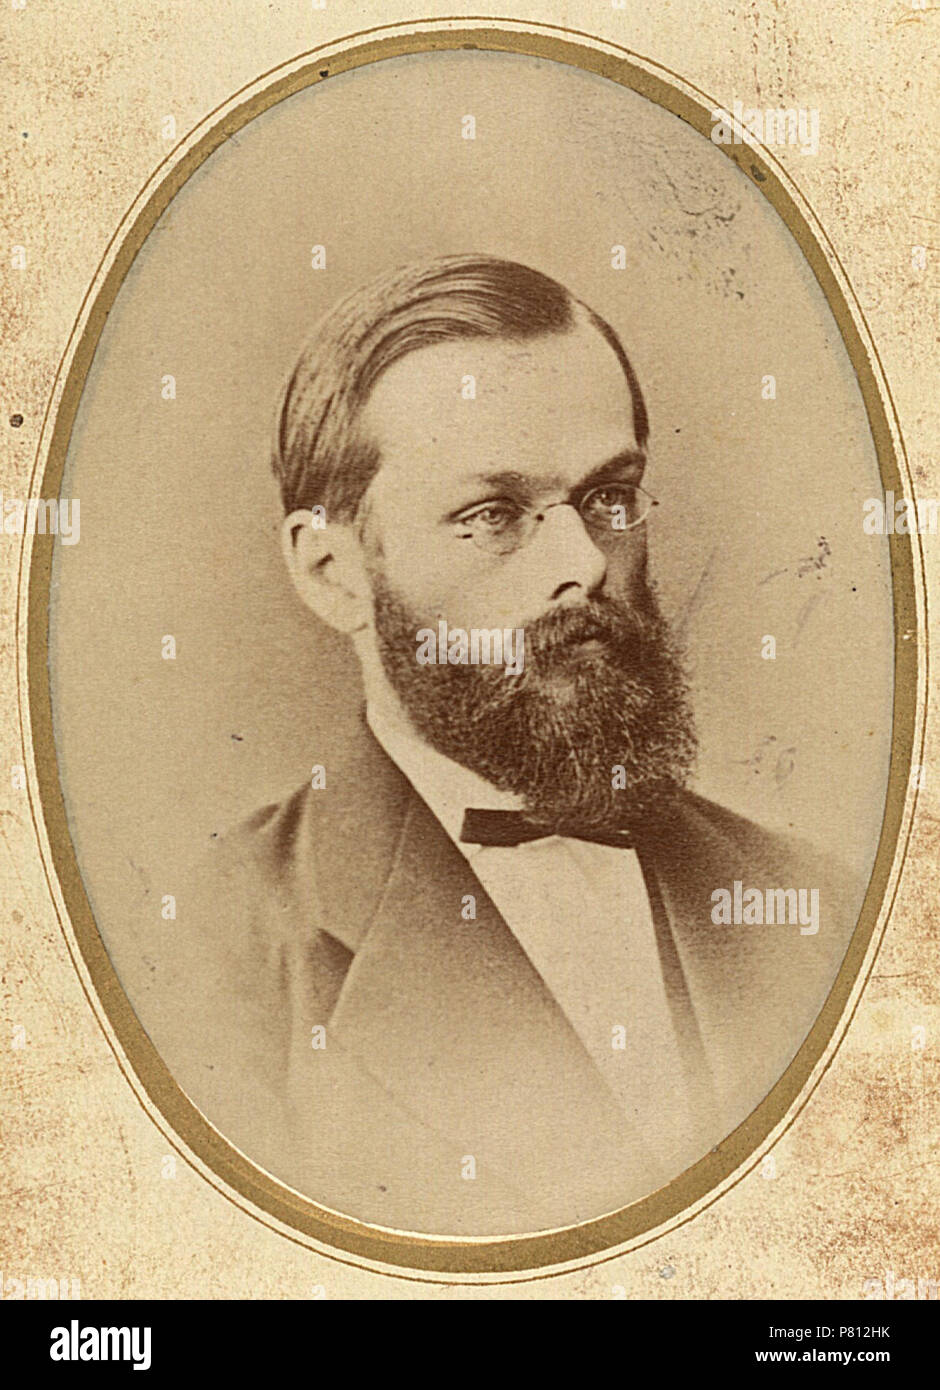 149 ETH-BIB-Müller, Johann Jakob (1846-1875)-Portrait-Portr 06239.tif (cropped) Stock Photo